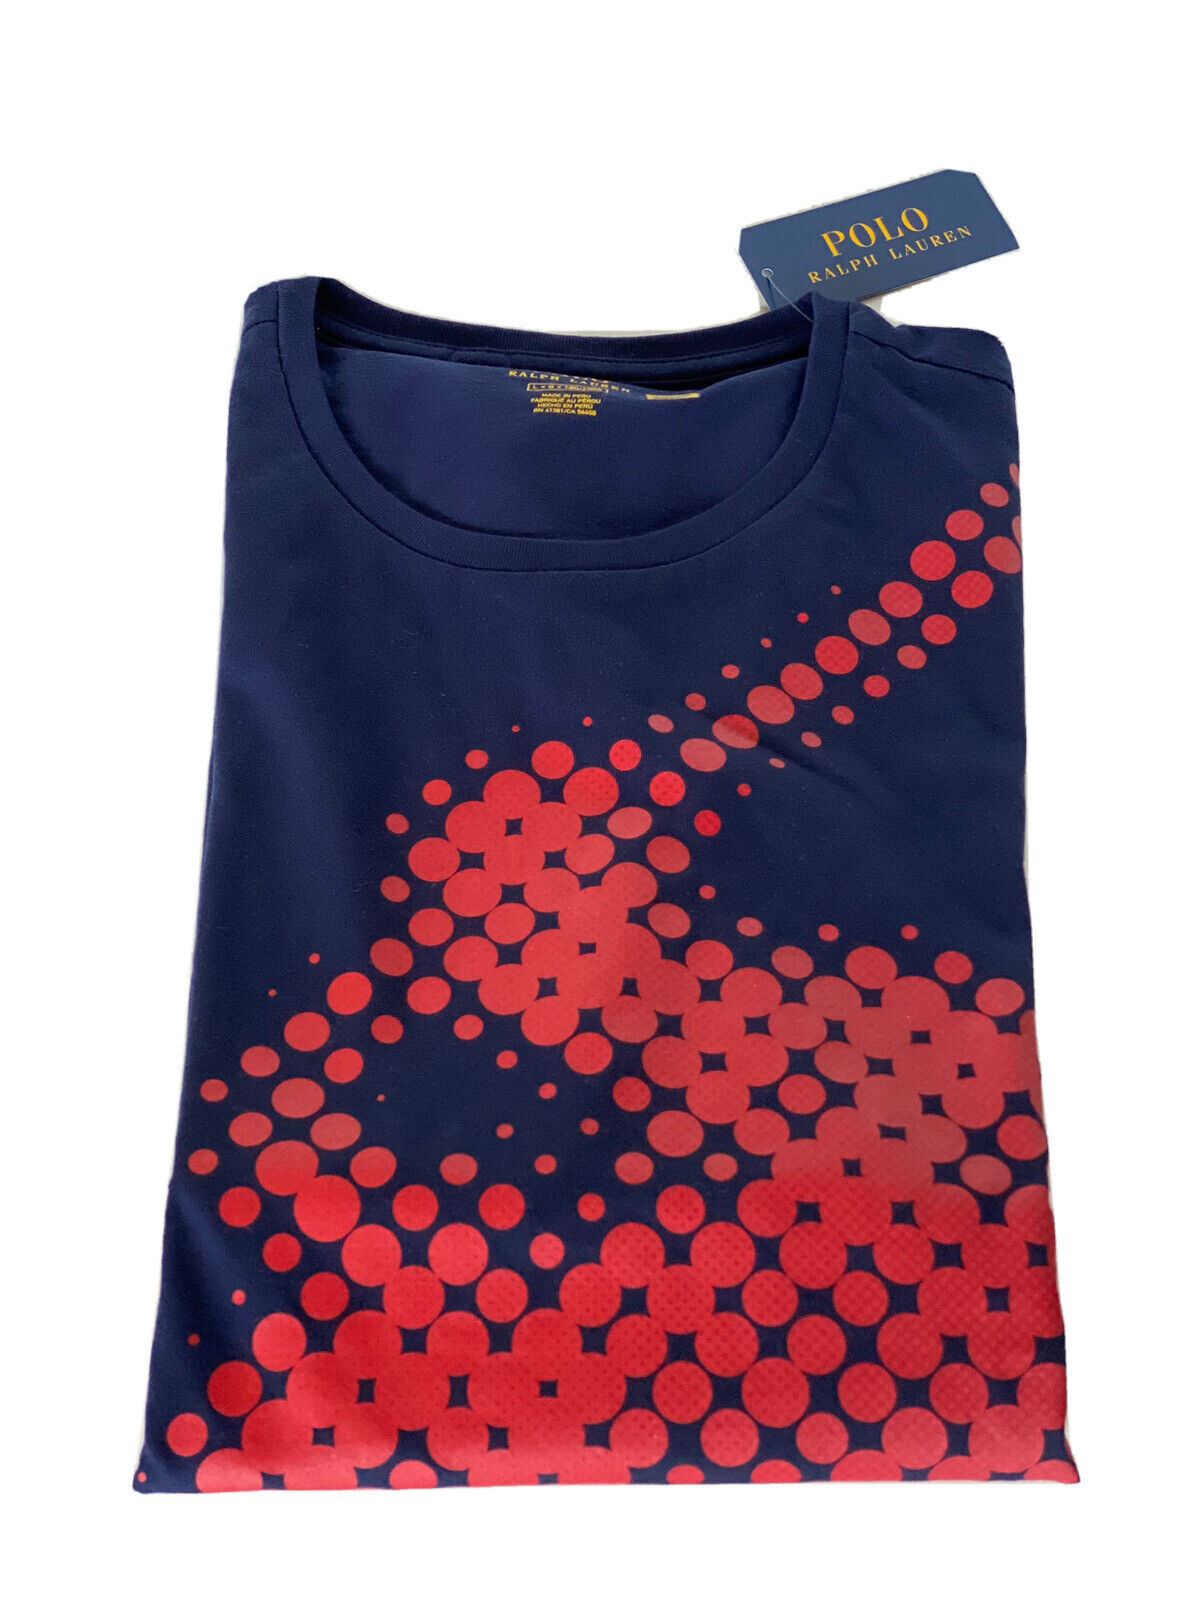 Neu mit Etikett: 65 $ Polo Ralph Lauren Kurzarm-Logo-T-Shirt Blau 2XL 